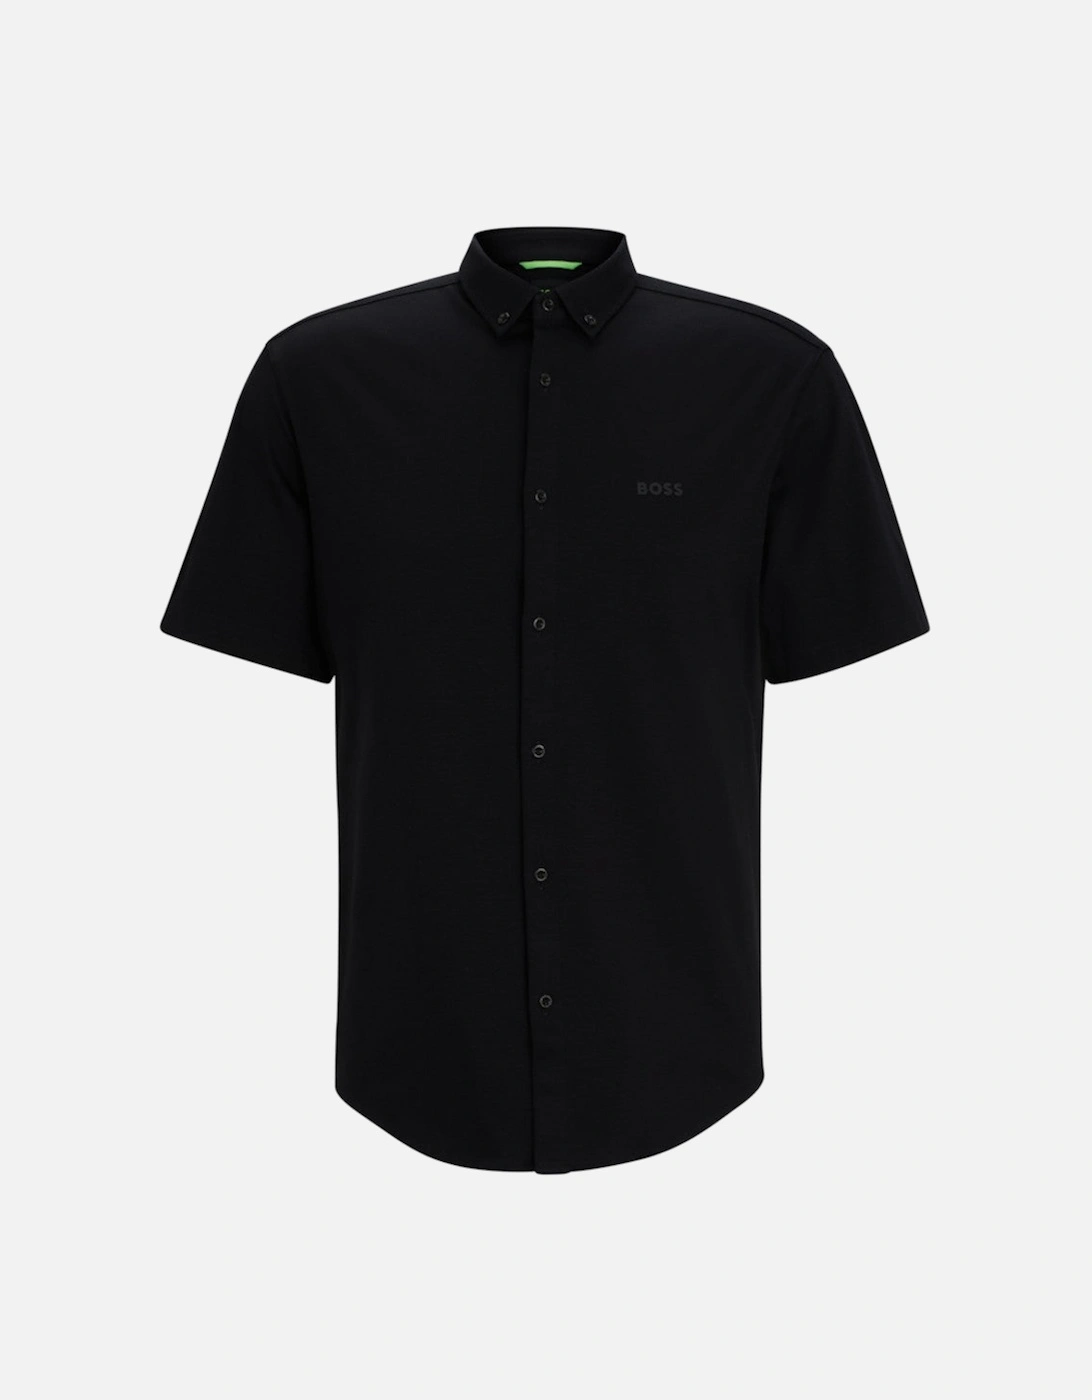 BOSS Green B_Motion_S Shirt 10233753 002 Black, 5 of 4